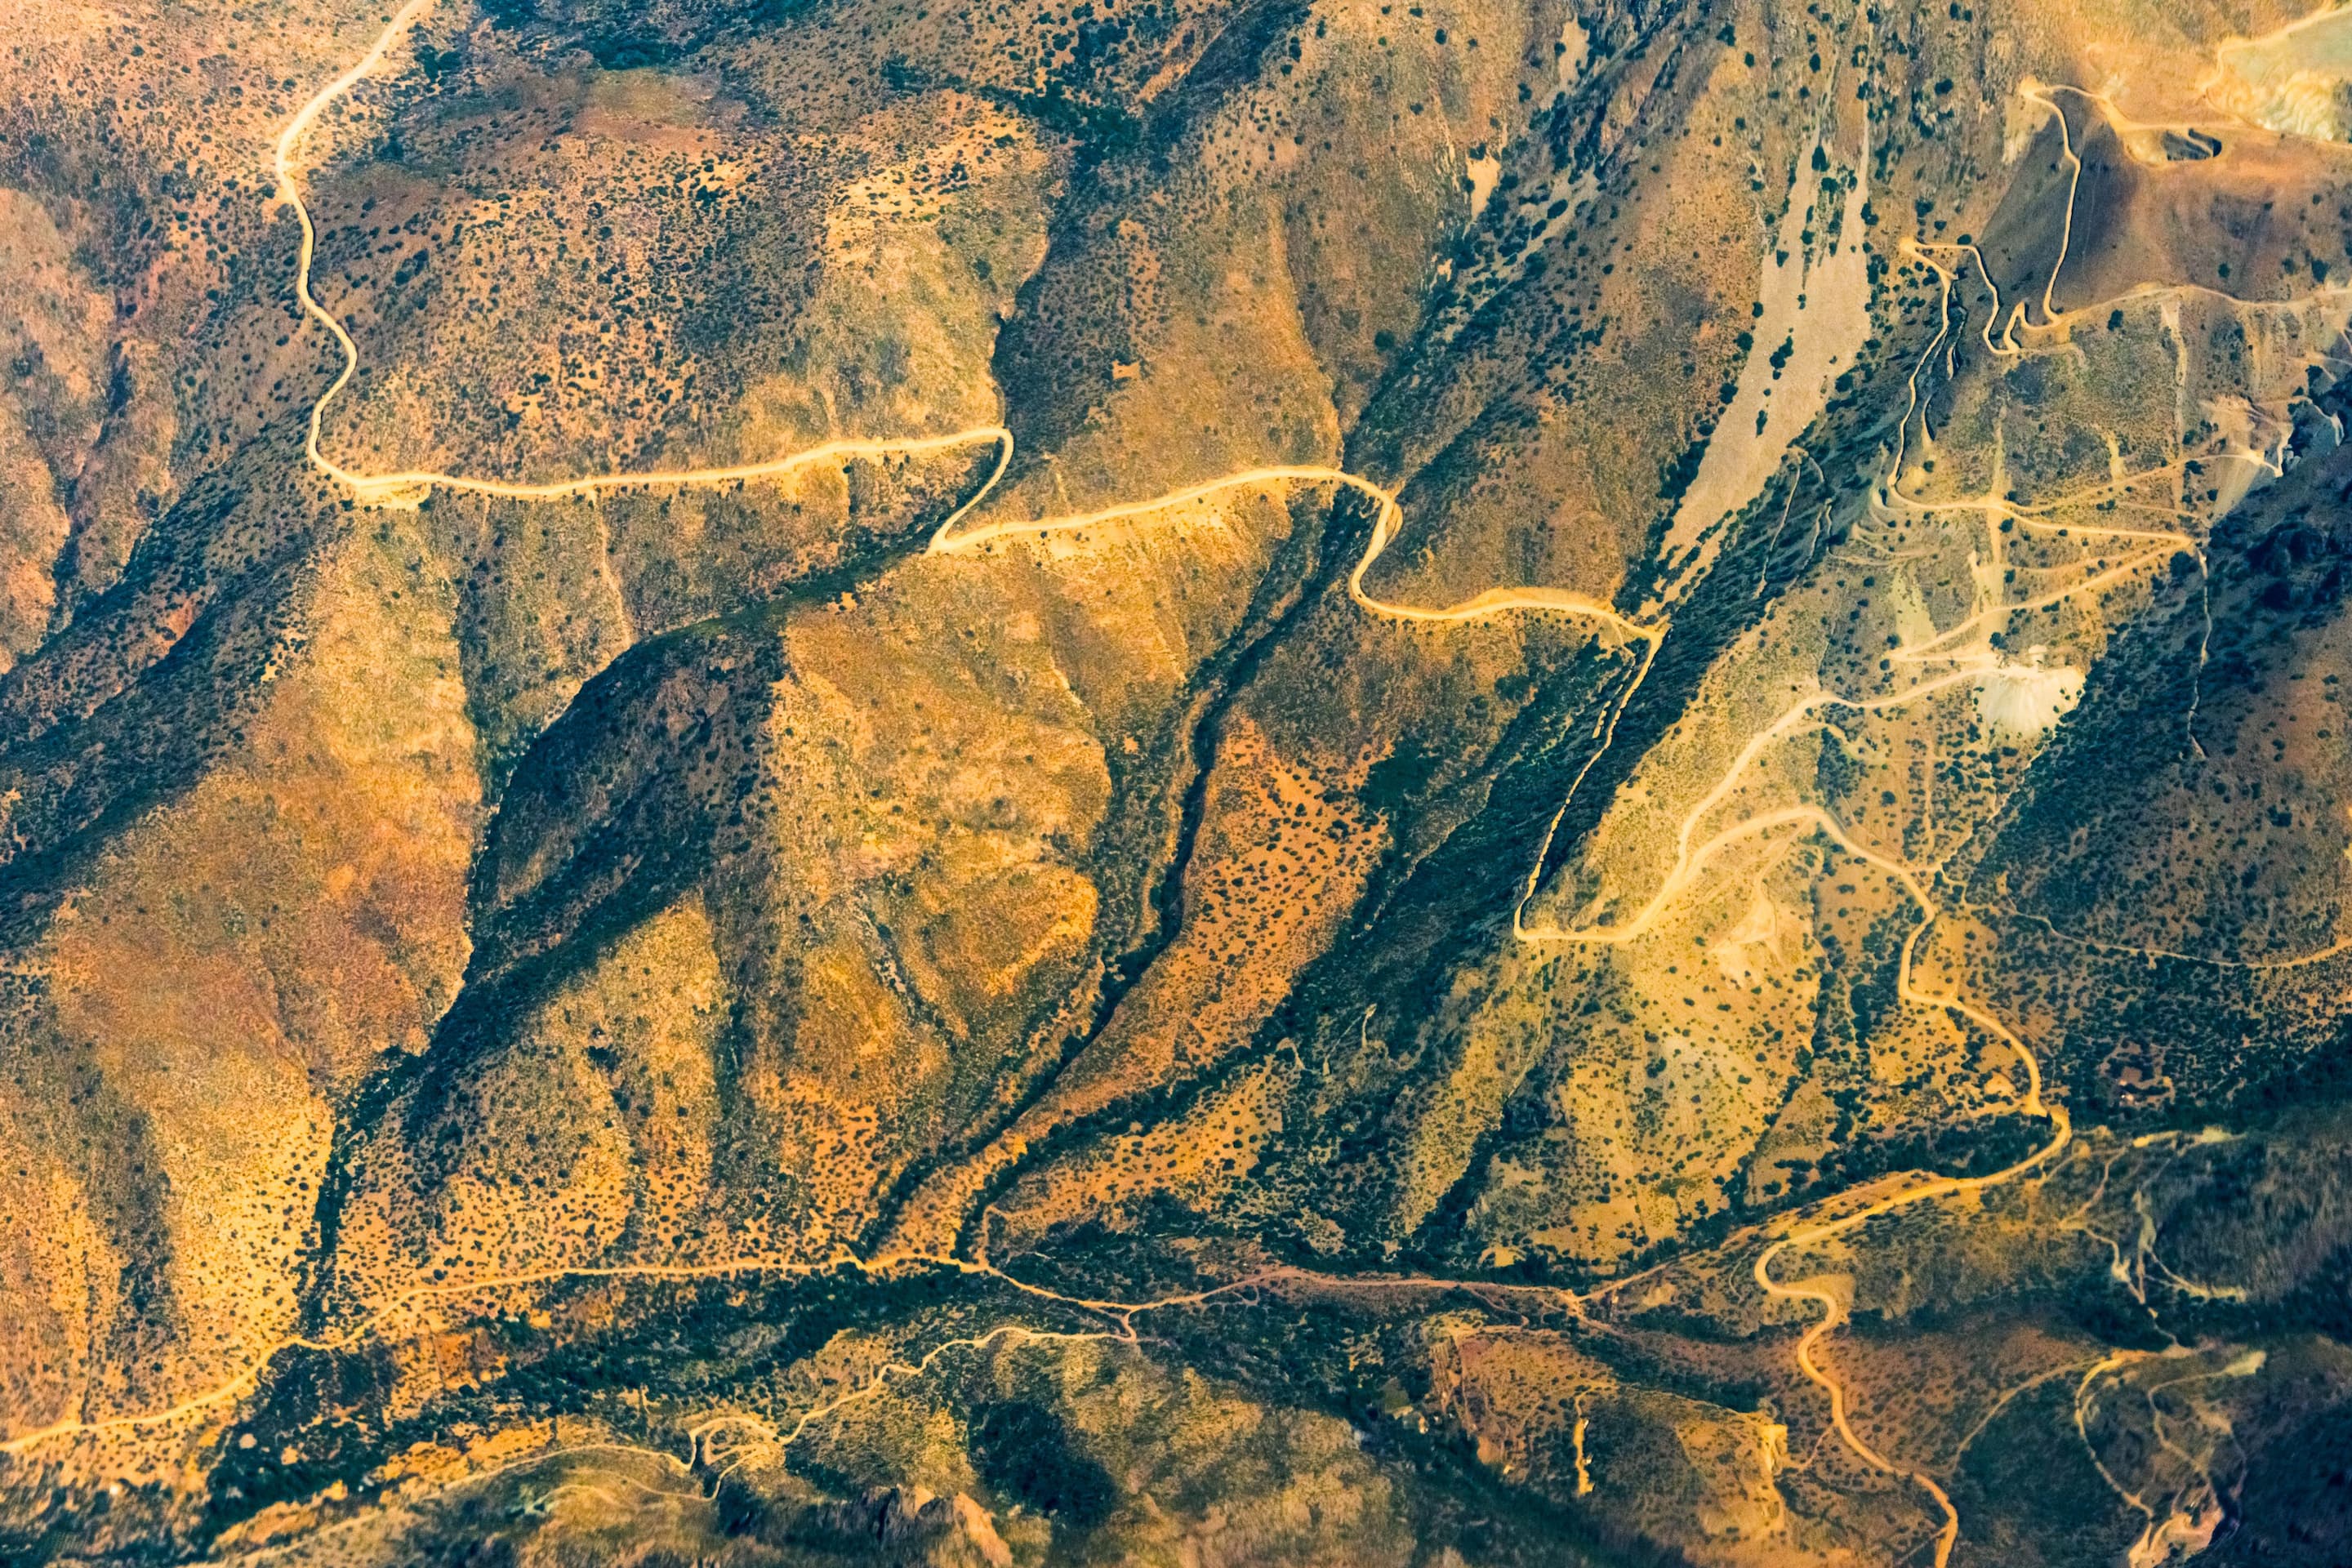 Aerial view of roads winding across rugged mountainous terrain